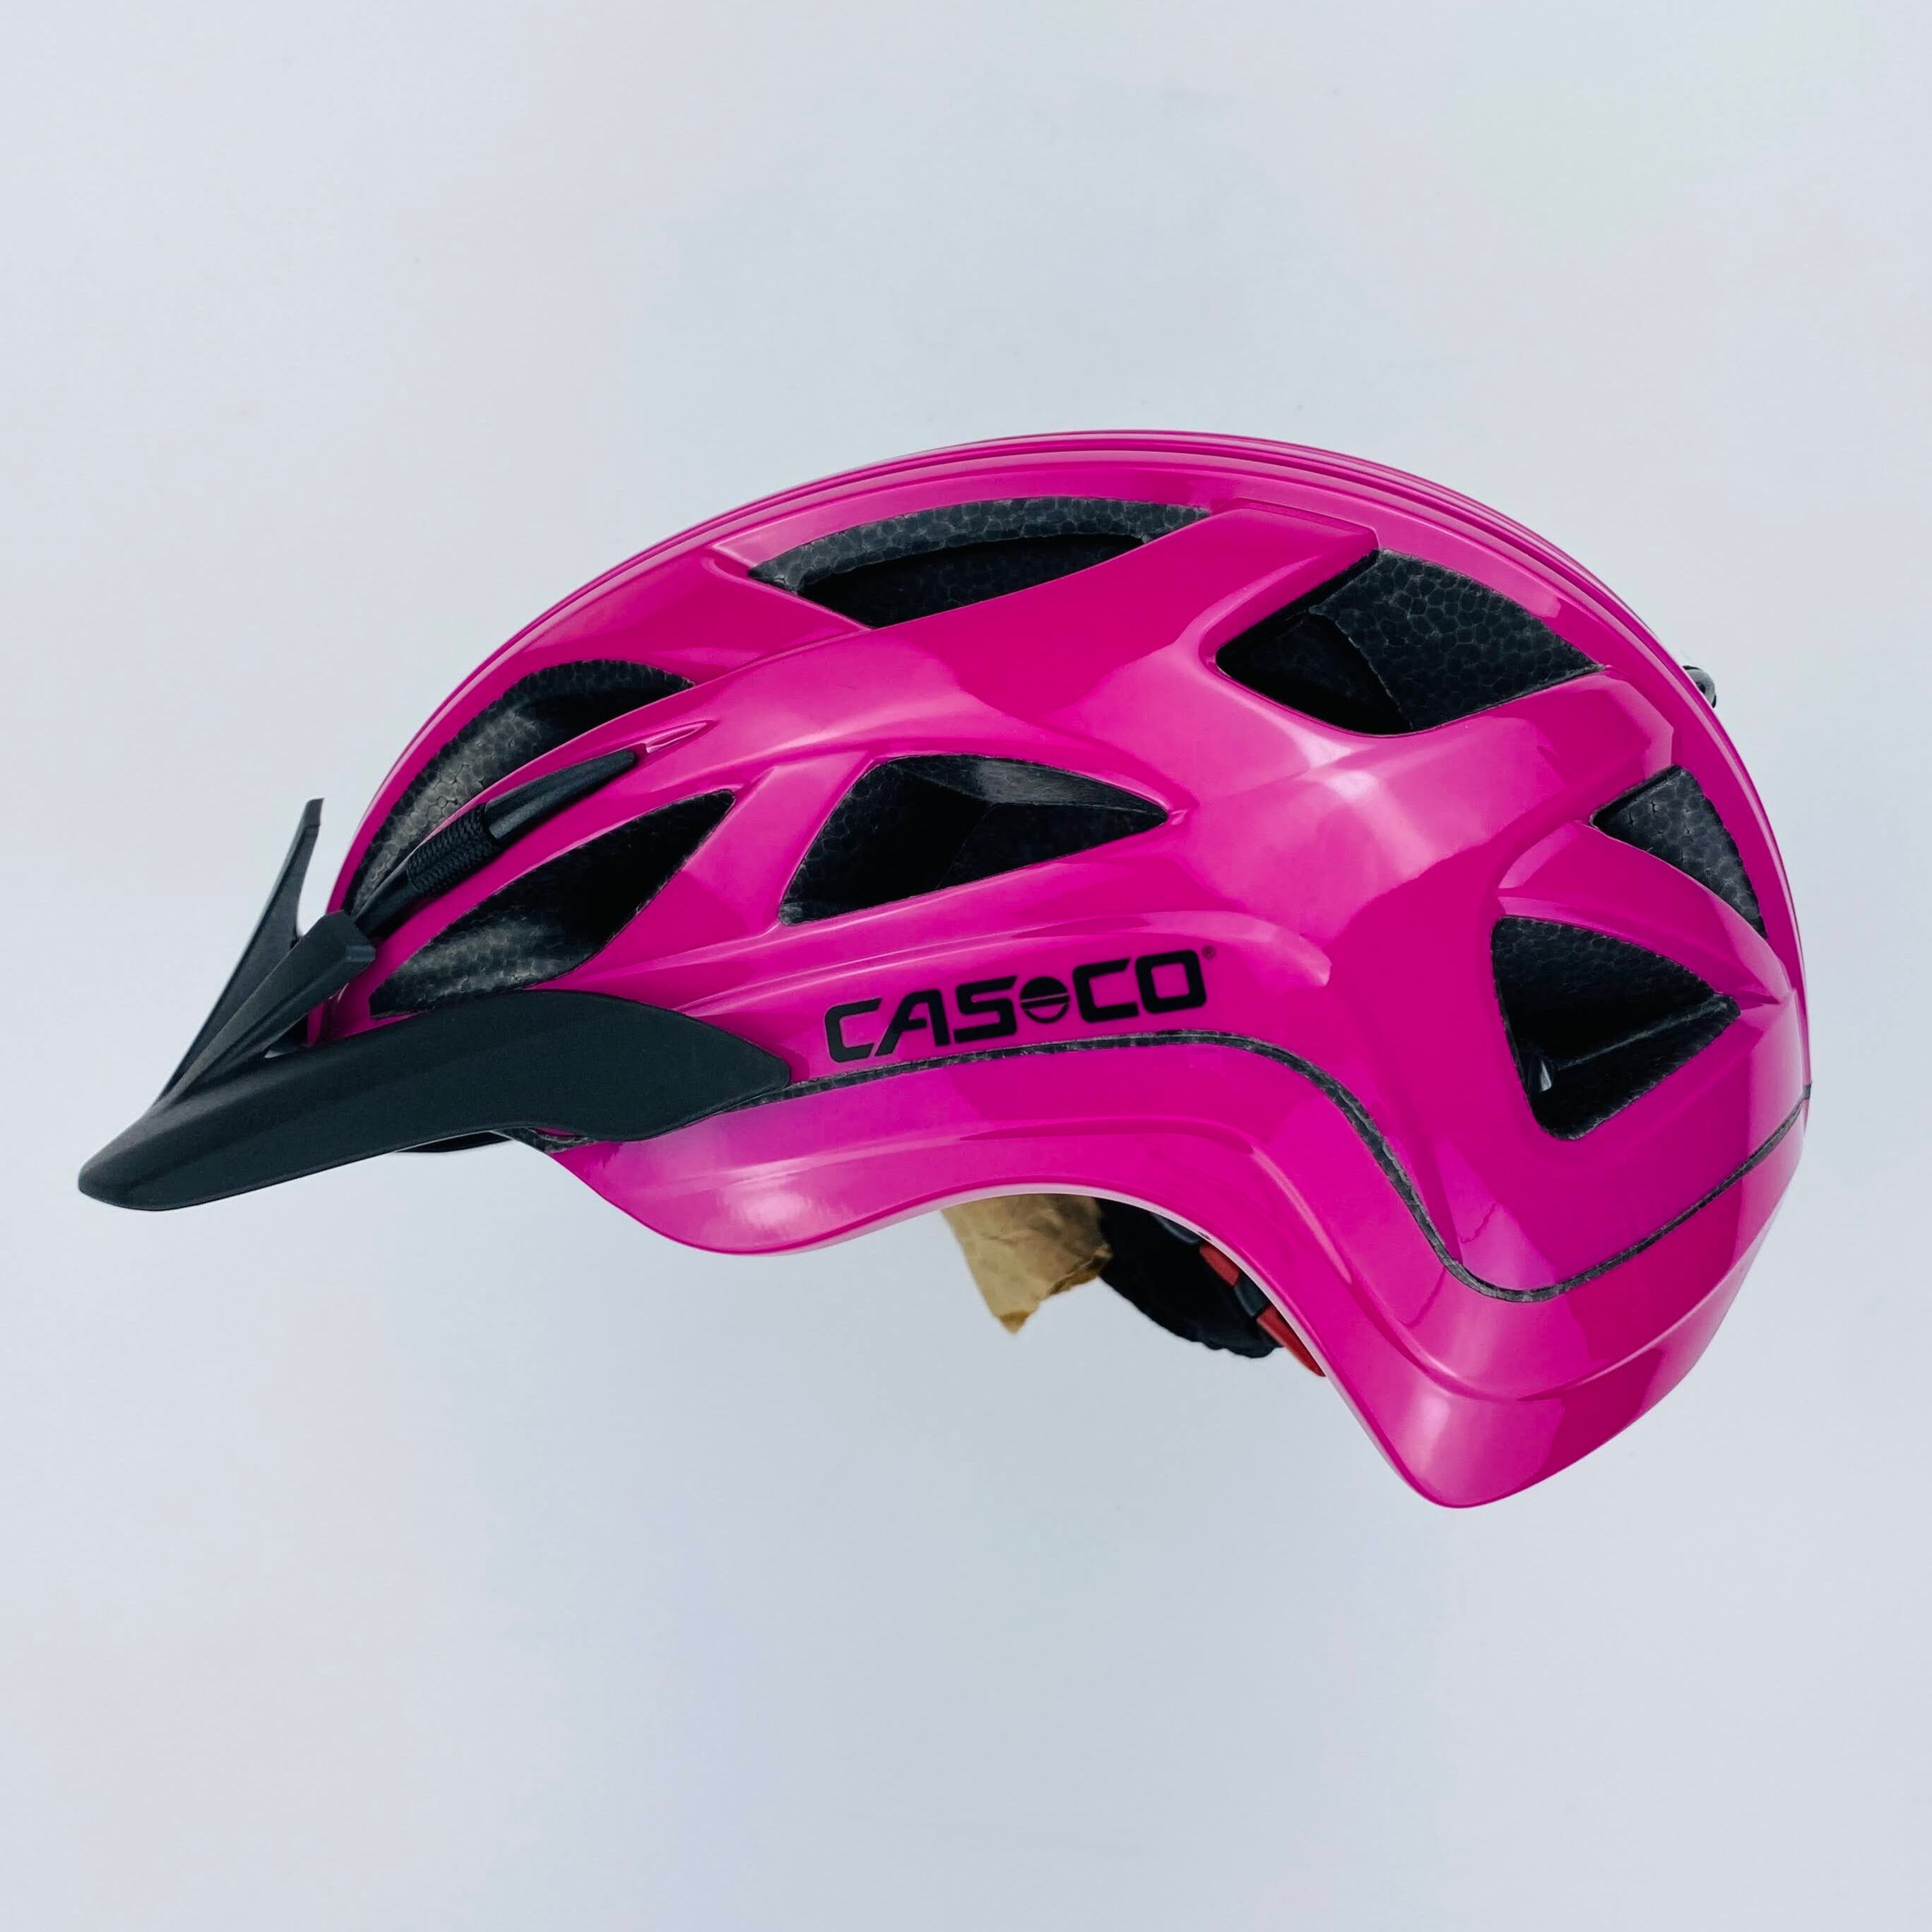 Casco Activ 2 Junior - Second hand Fahrradhelm - Kind - Rosa - 52-56 cm | Hardloop